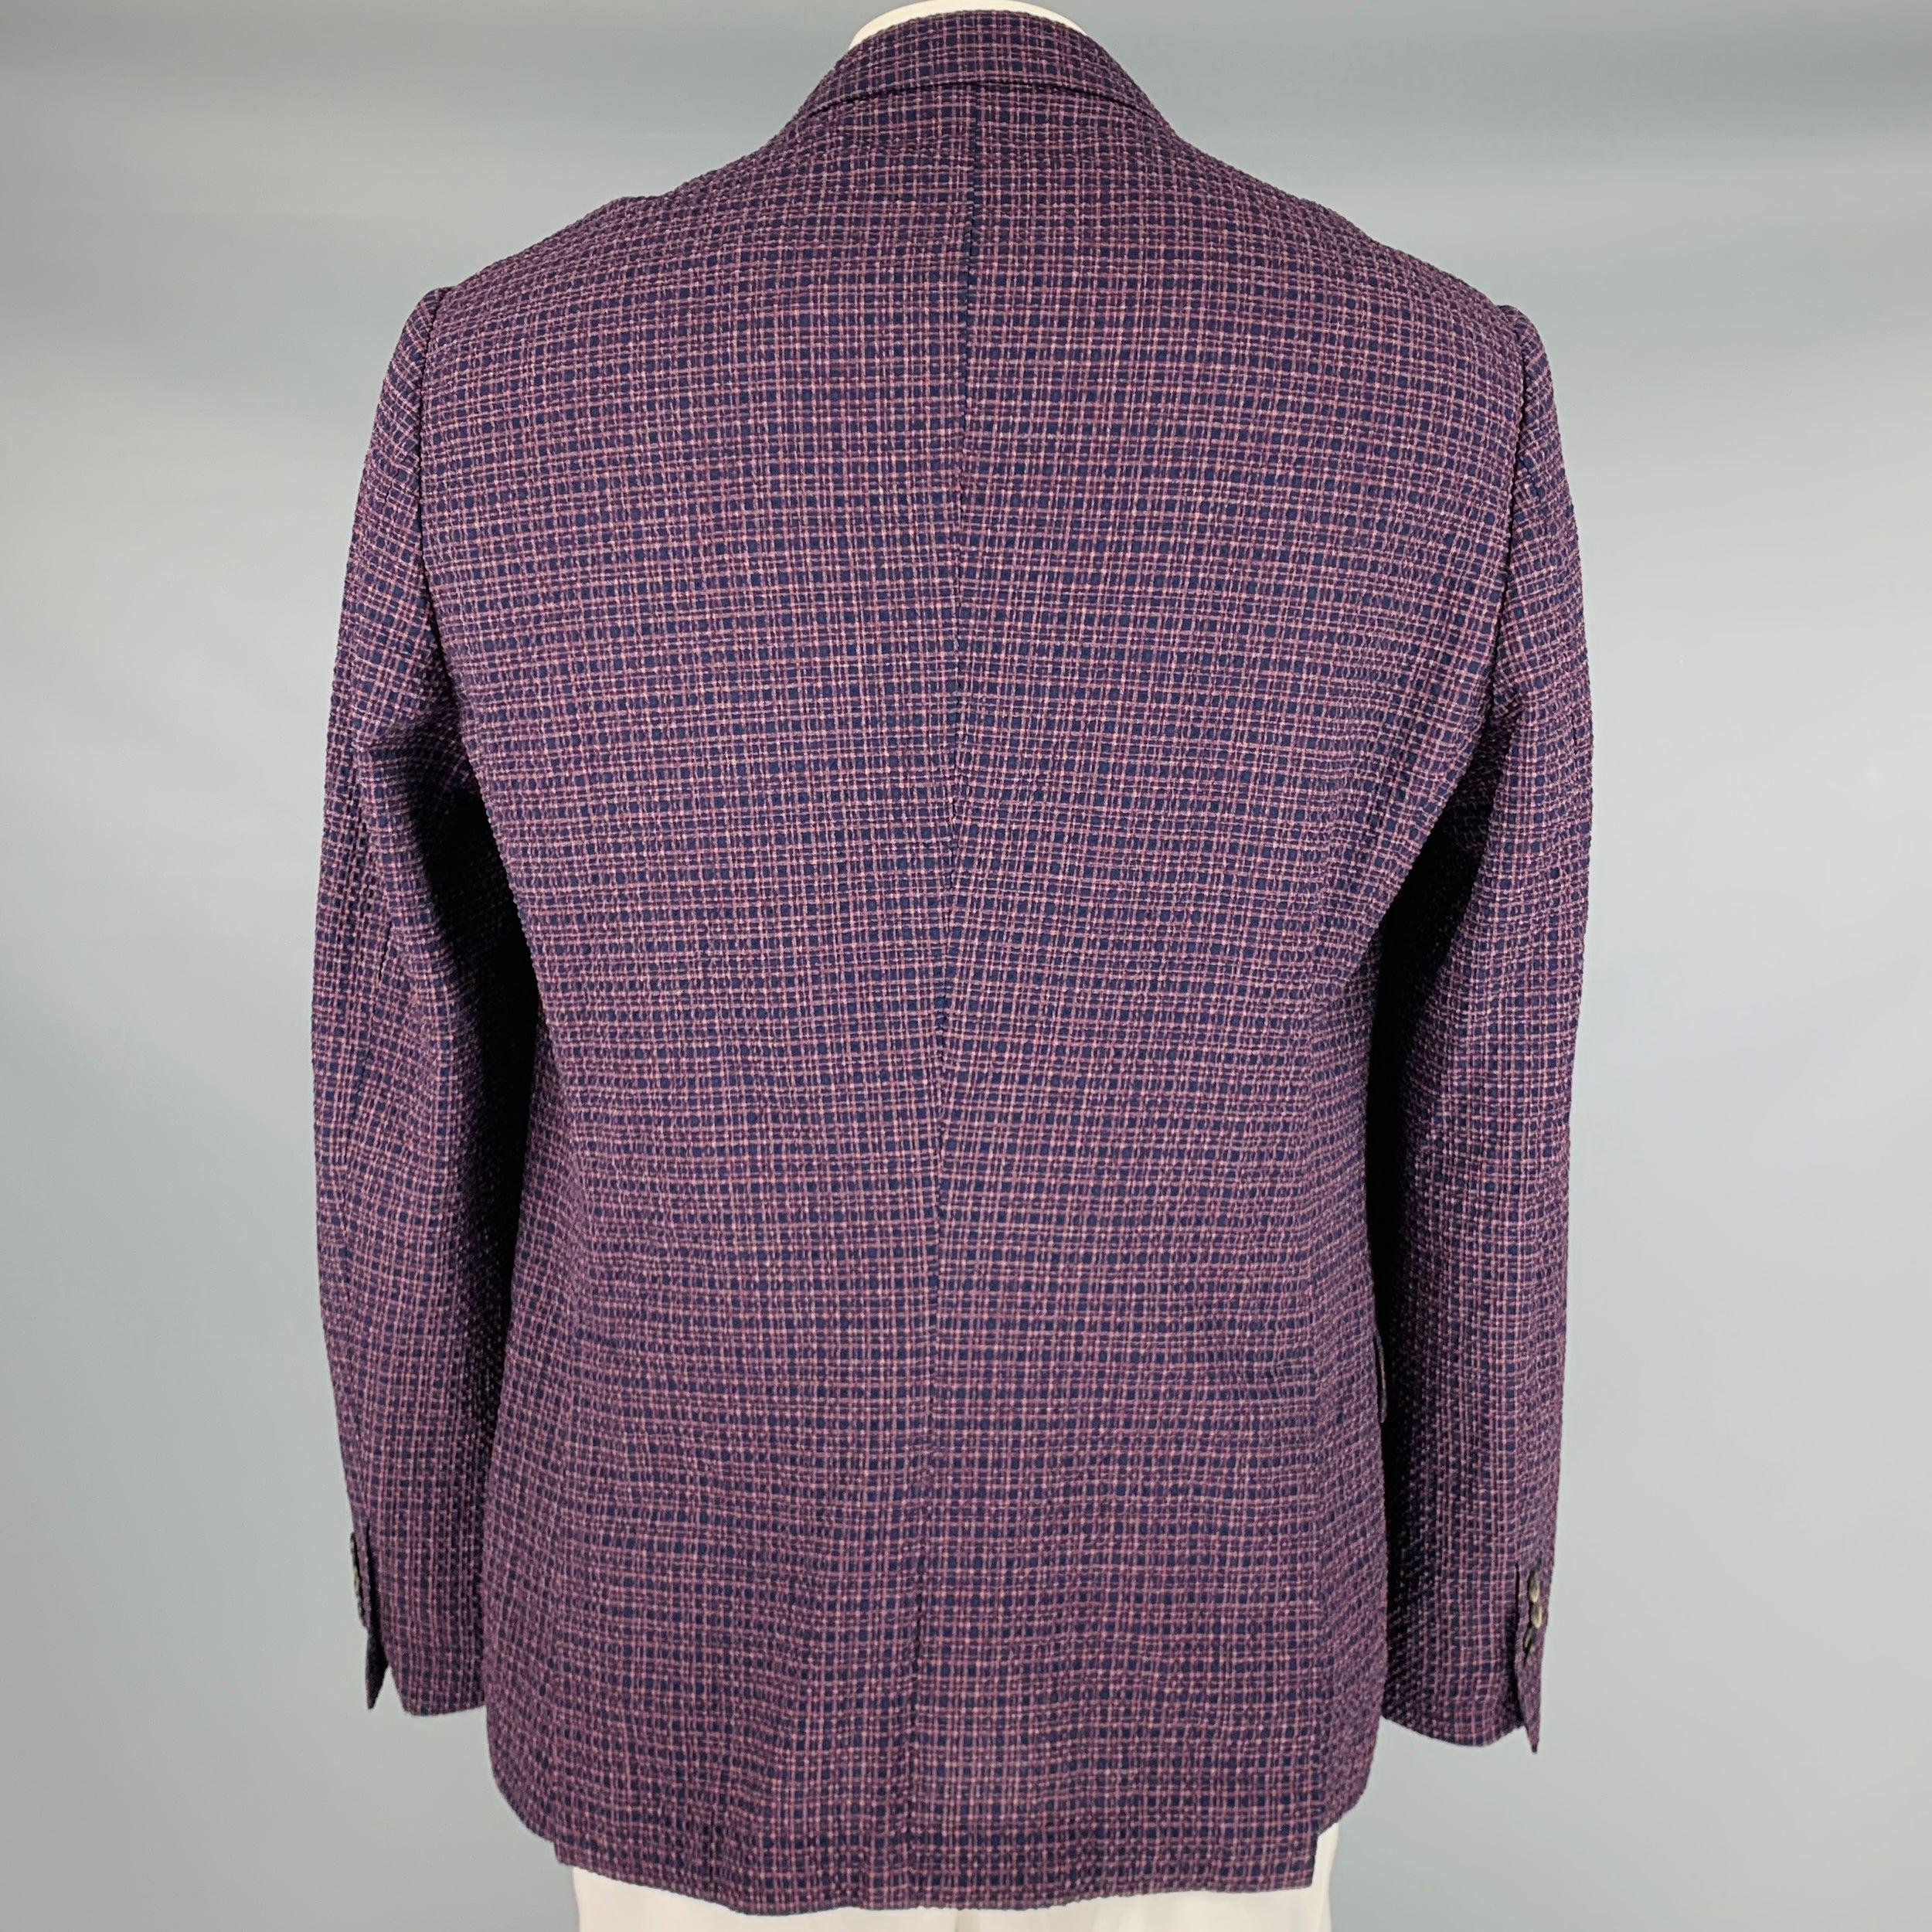 Men's SAKS FIFTH AVENUE Size 44 Purple Navy Plaid Wool Blend Sport Coat